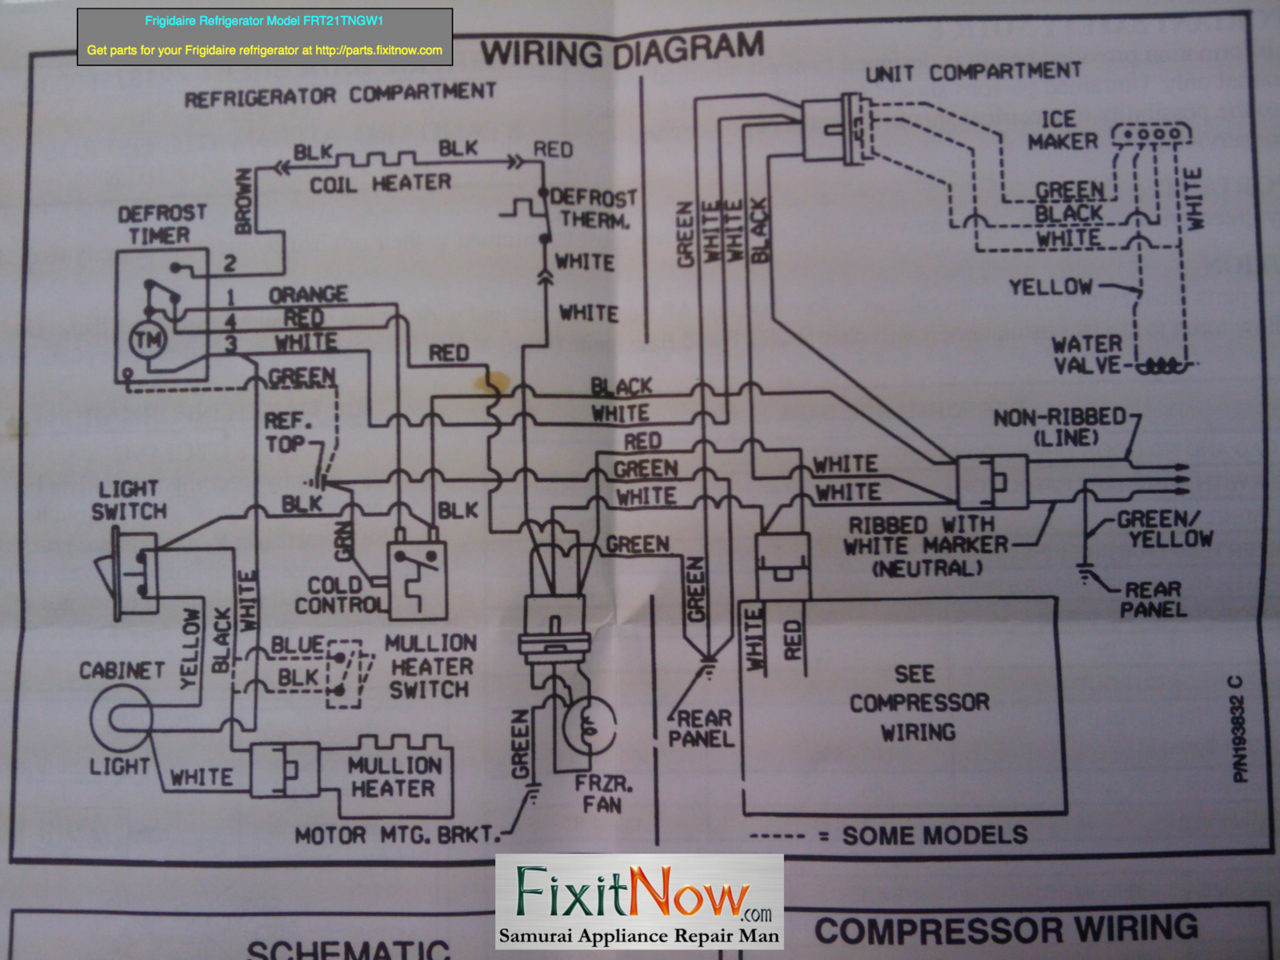 Wiring Diagrams And Schematics - Appliantology - Whirlpool Refrigerator Wiring Diagram